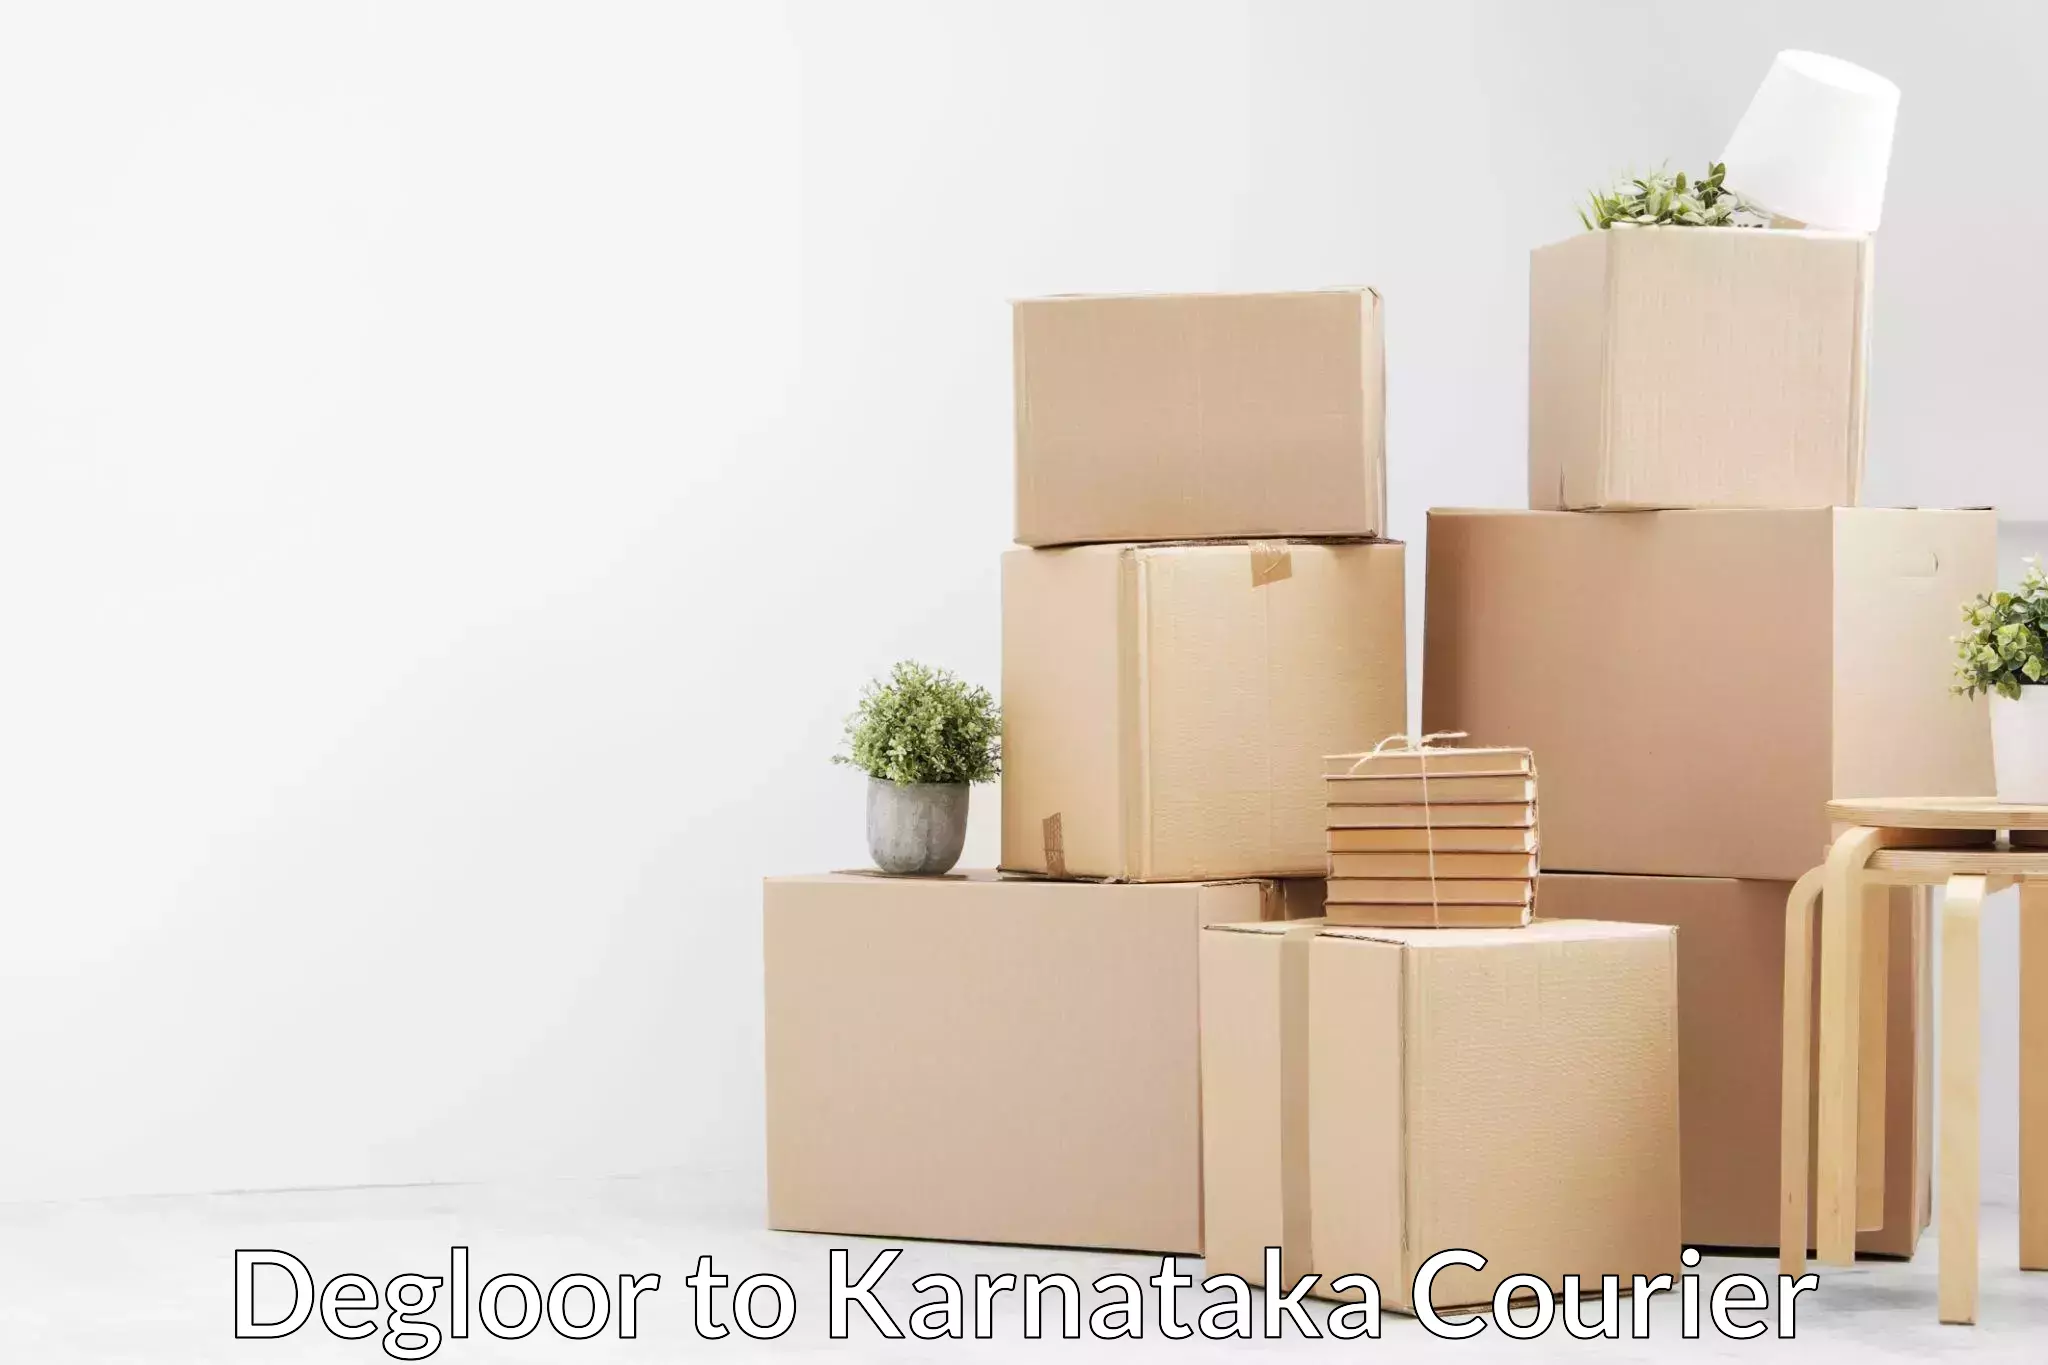 Home relocation experts Degloor to Karnataka